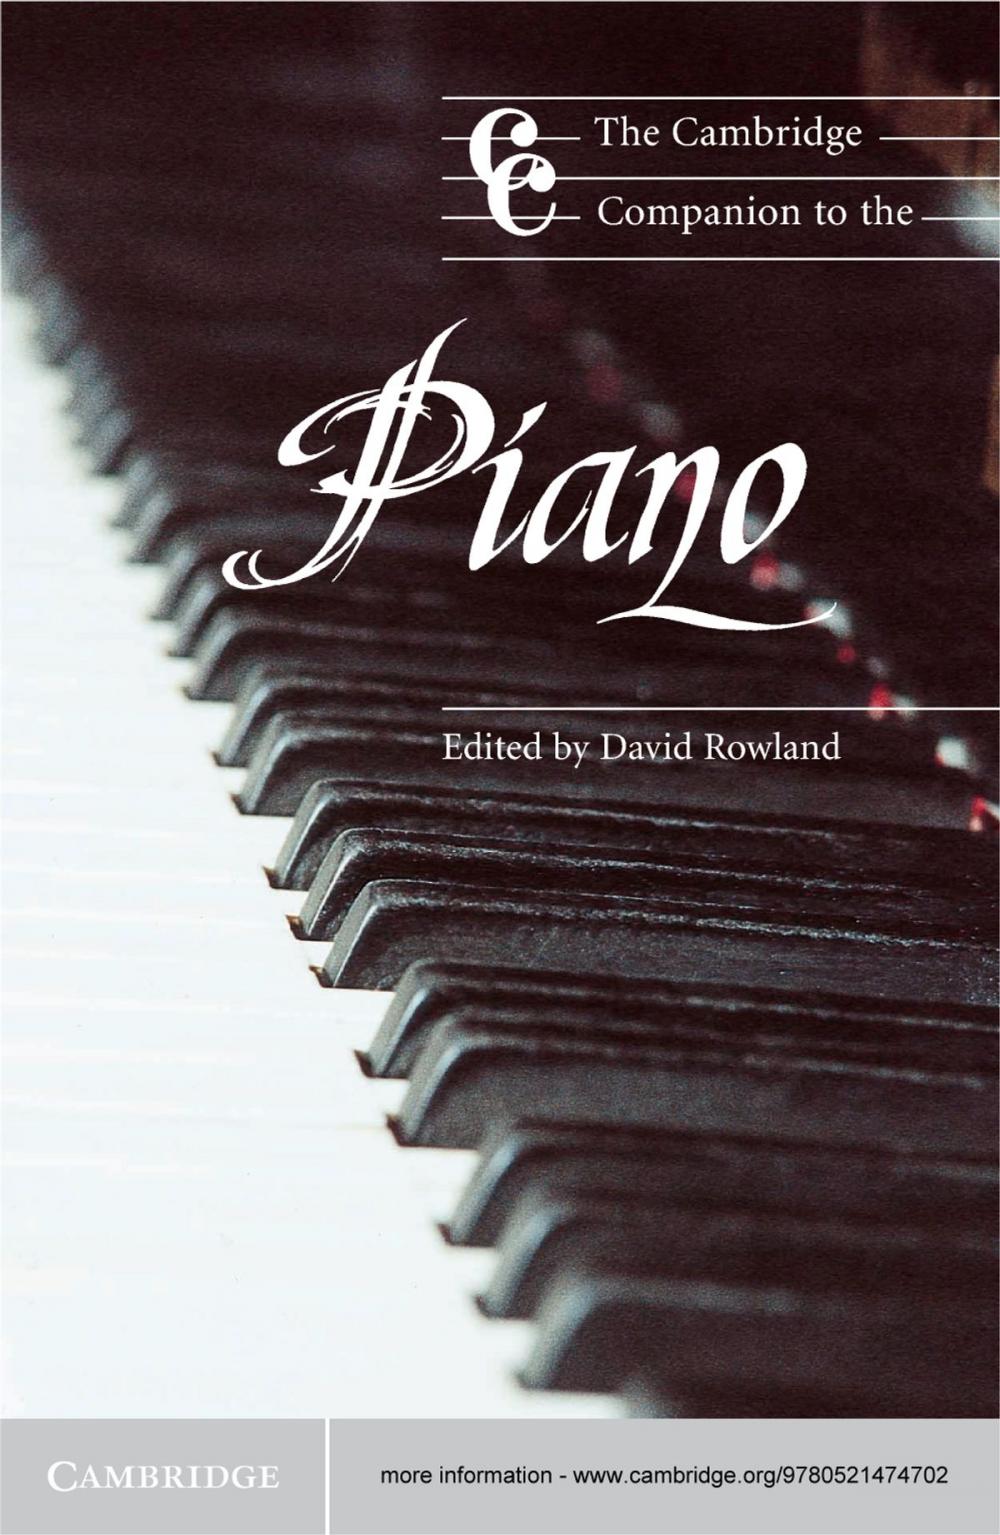 Big bigCover of The Cambridge Companion to the Piano